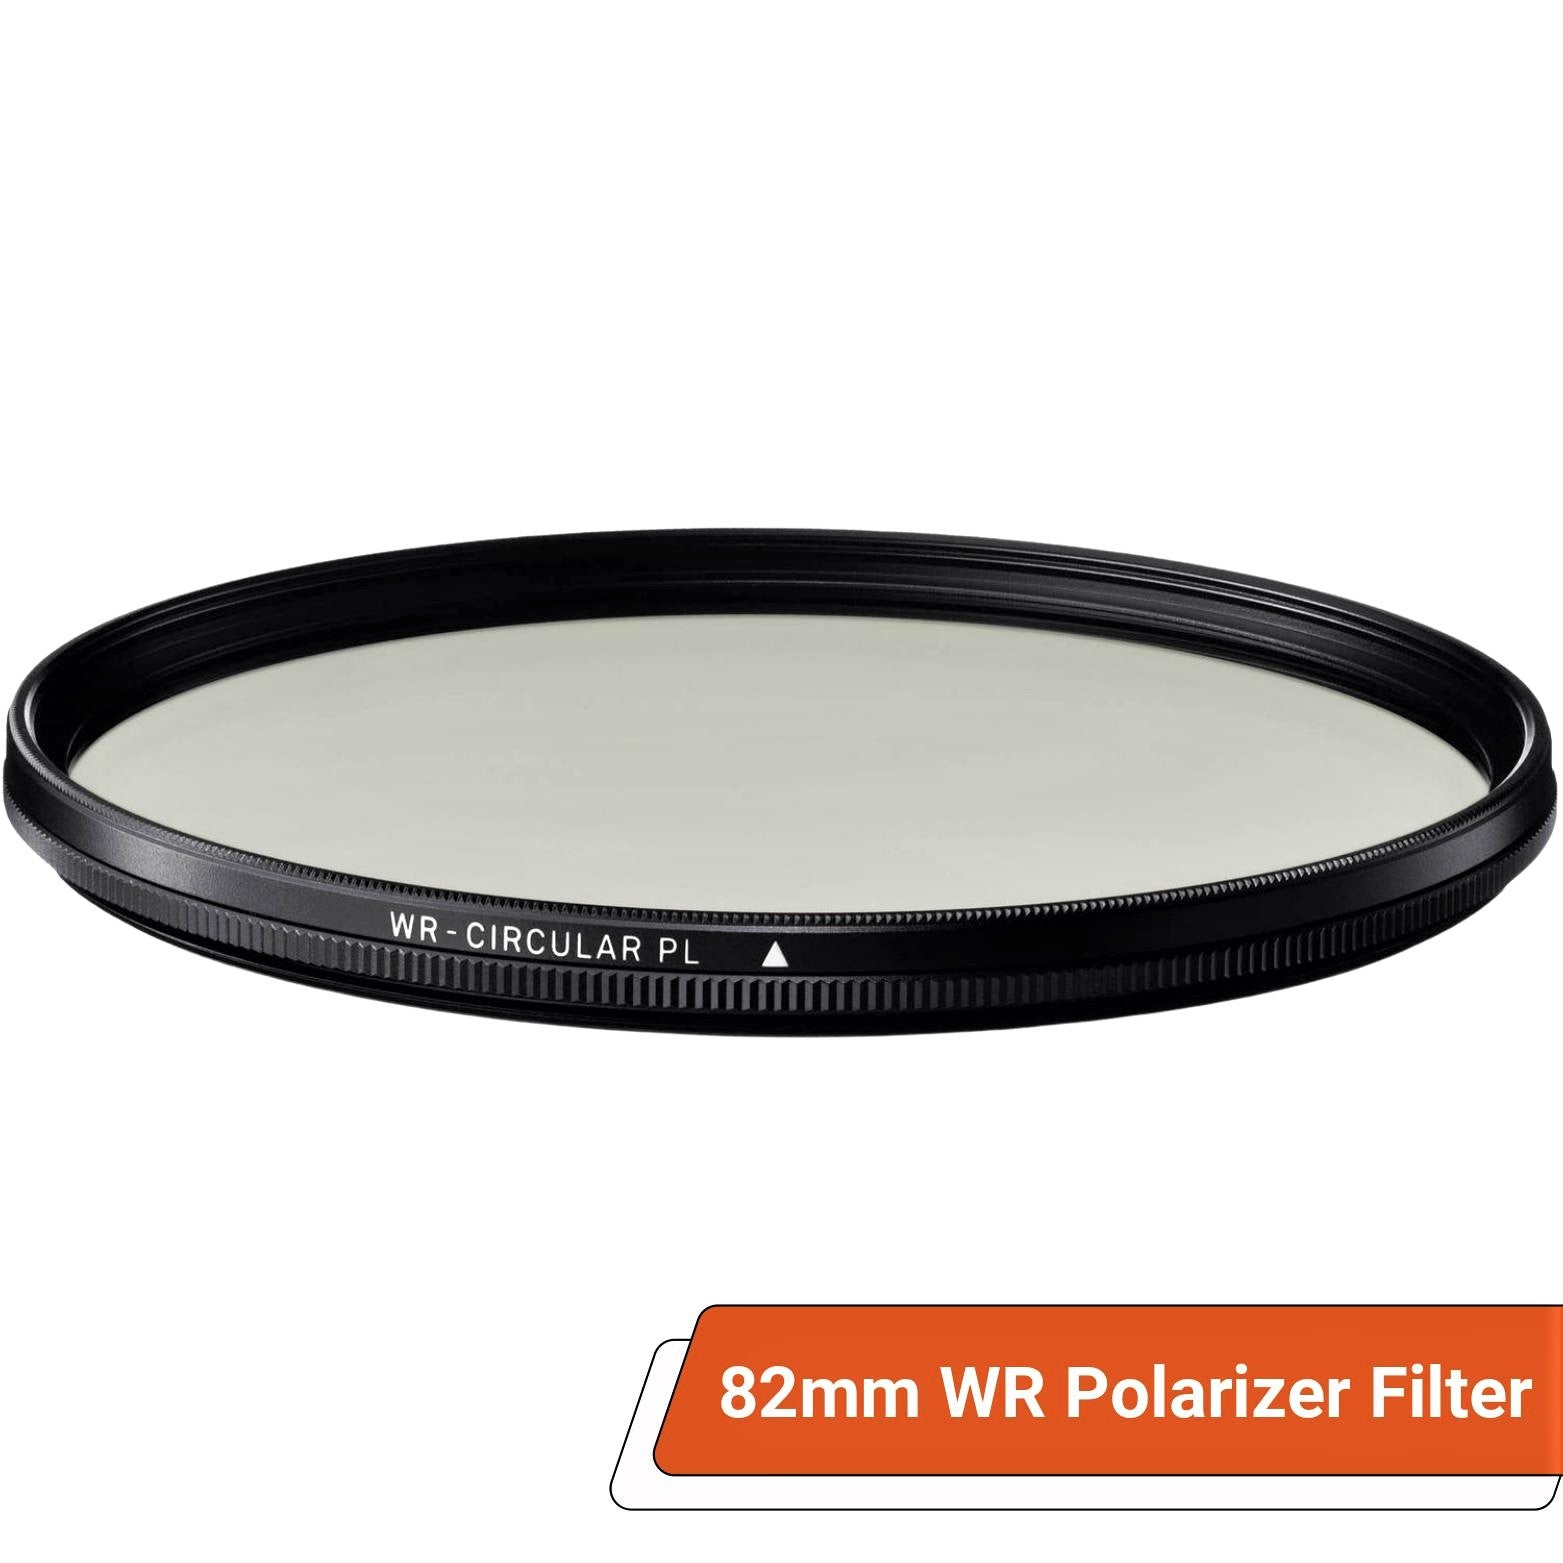 Sigma 82mm WR (Water Repellent) Circular Polarizer Filter